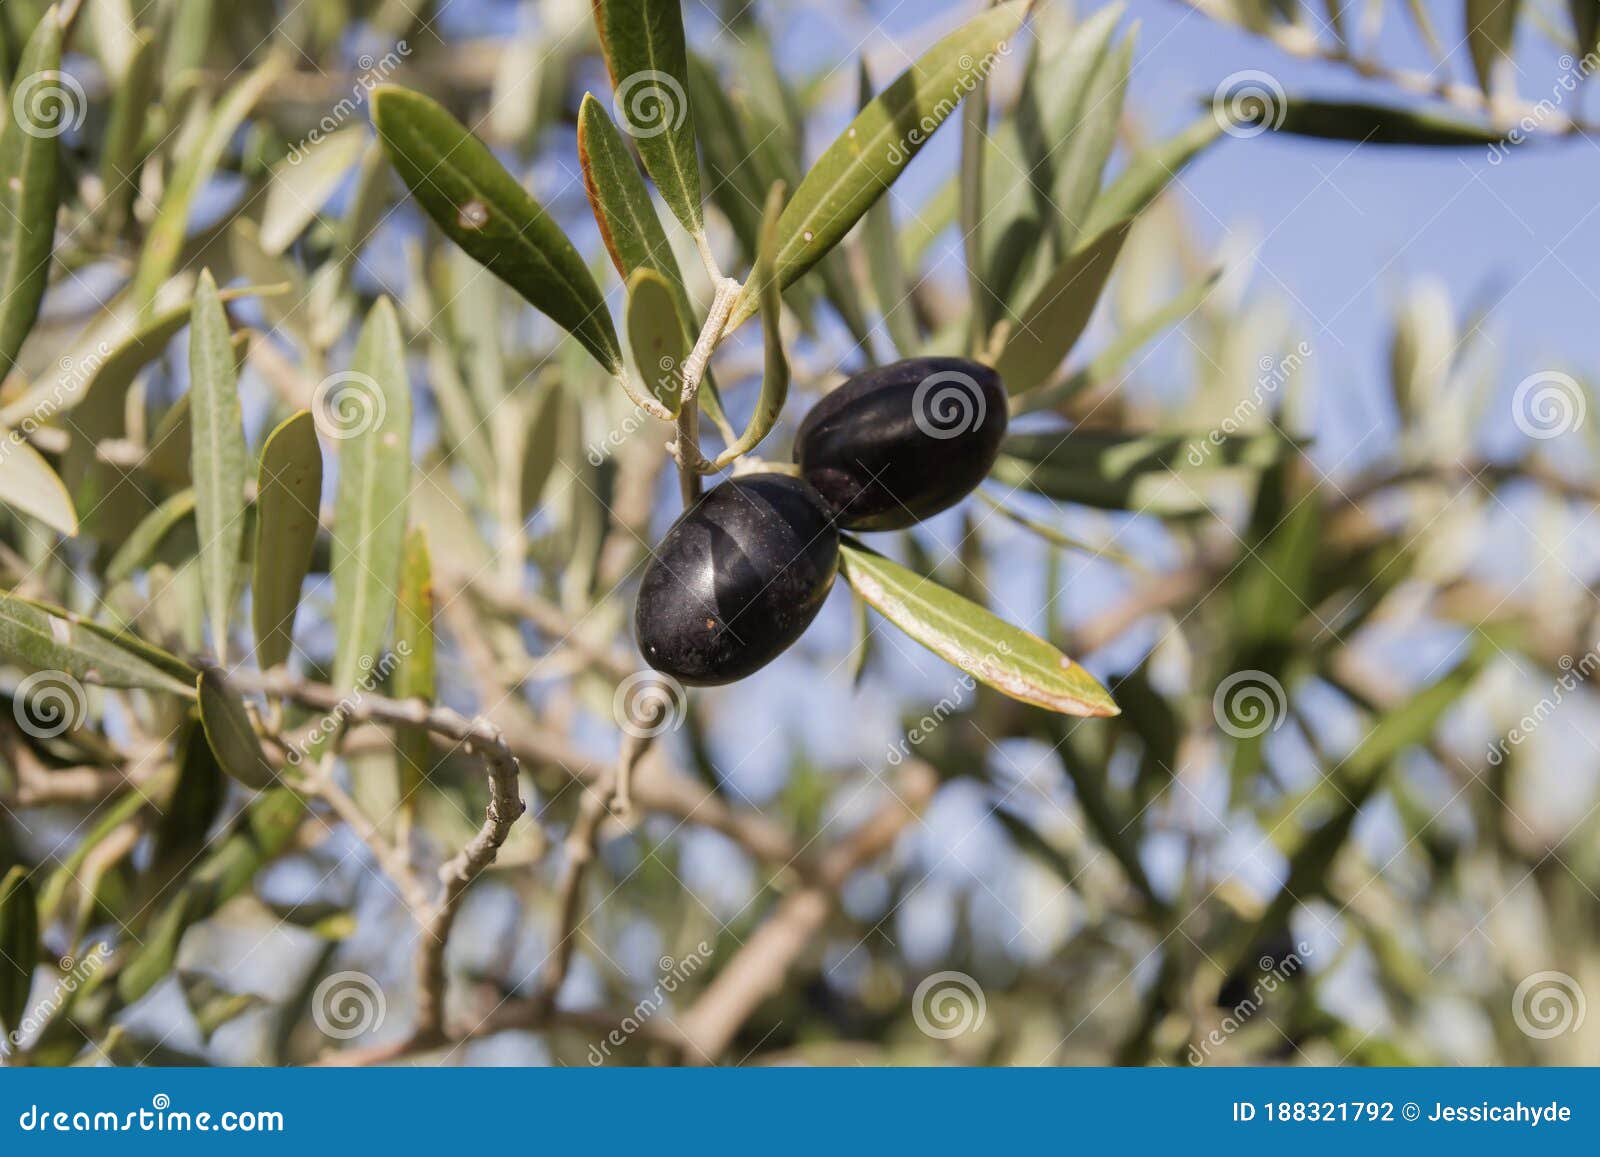 https://thumbs.dreamstime.com/z/ripe-olive-tree-black-fruits-188321792.jpg